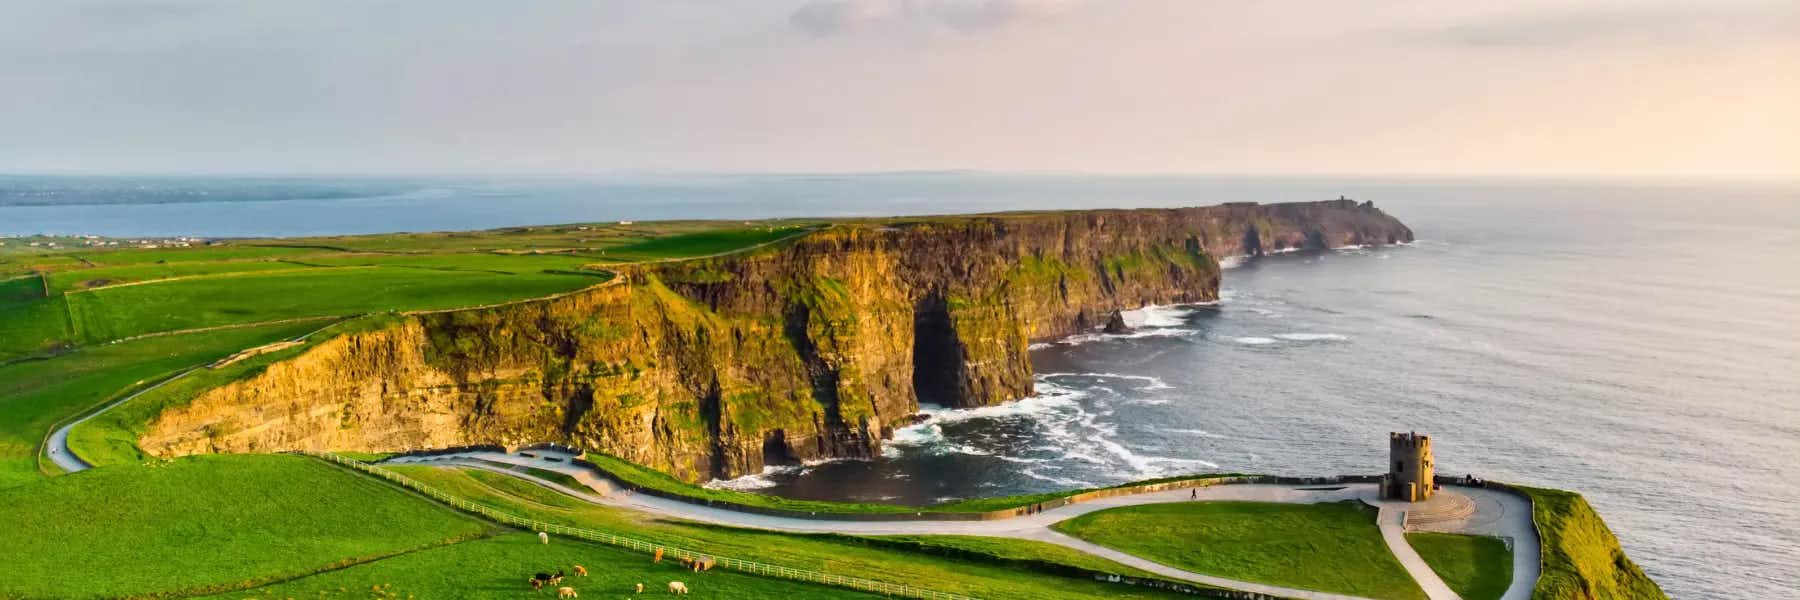 3 Great Towns on Ireland’s West Coast - The Wild Atlantic Way